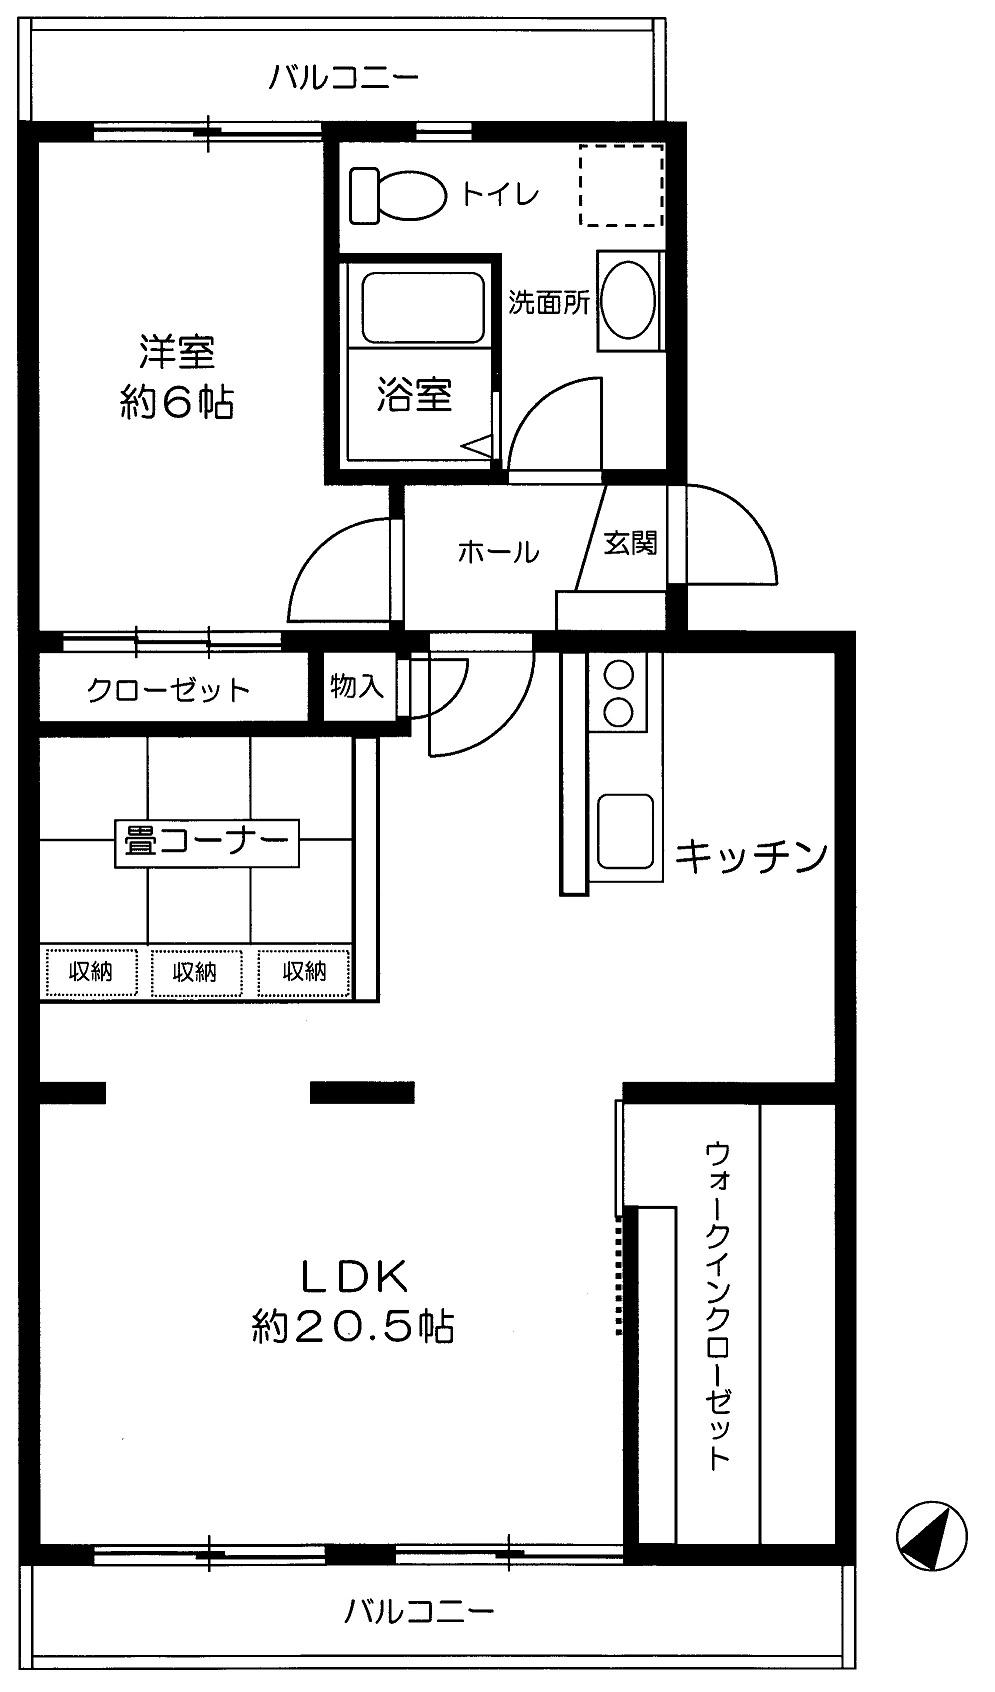 Floor plan. 1LDK + S (storeroom), Price 10.8 million yen, Footprint 67.5 sq m , Balcony area 13.98 sq m